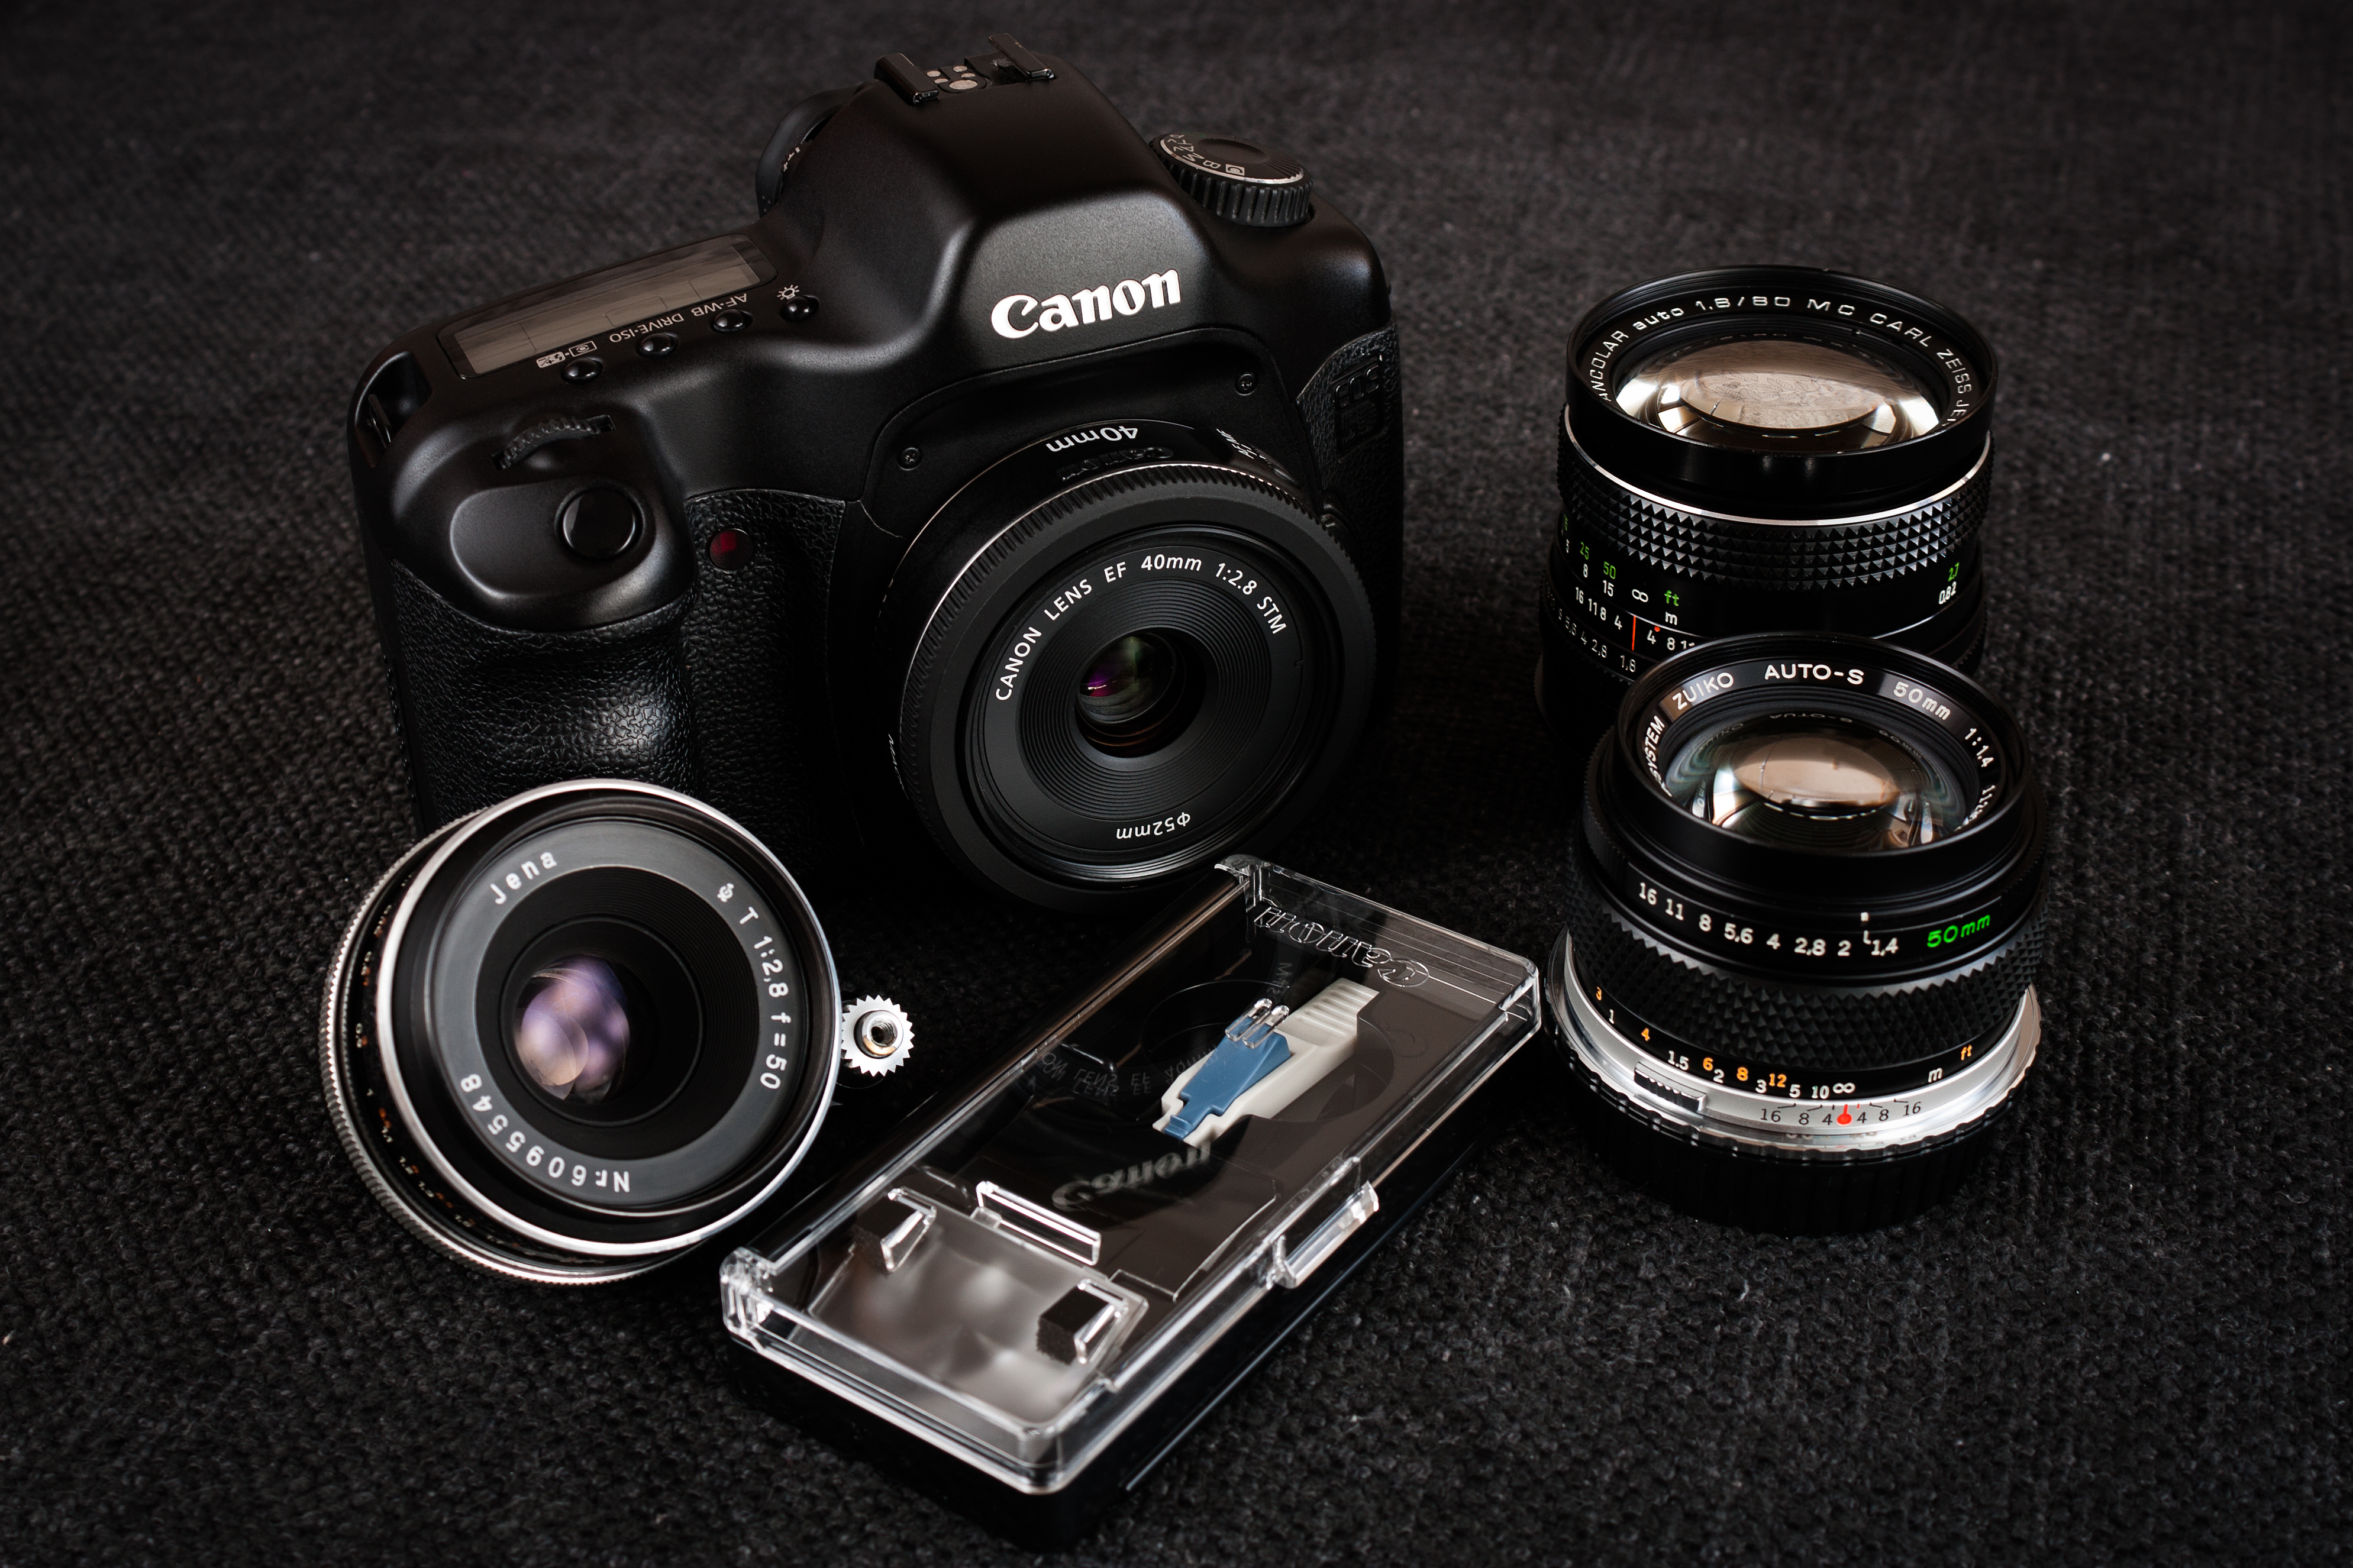 Canon EOES 5D, Canon 40mm f/2.8, Carl Zeiss Jena Pancolar 80mm f/1.8 (M42), Olympus Zuiko 50mm f/1.4 (Olympus OM), Carl Zeiss Jena Tessar 50mm f/2.8 (Exa)